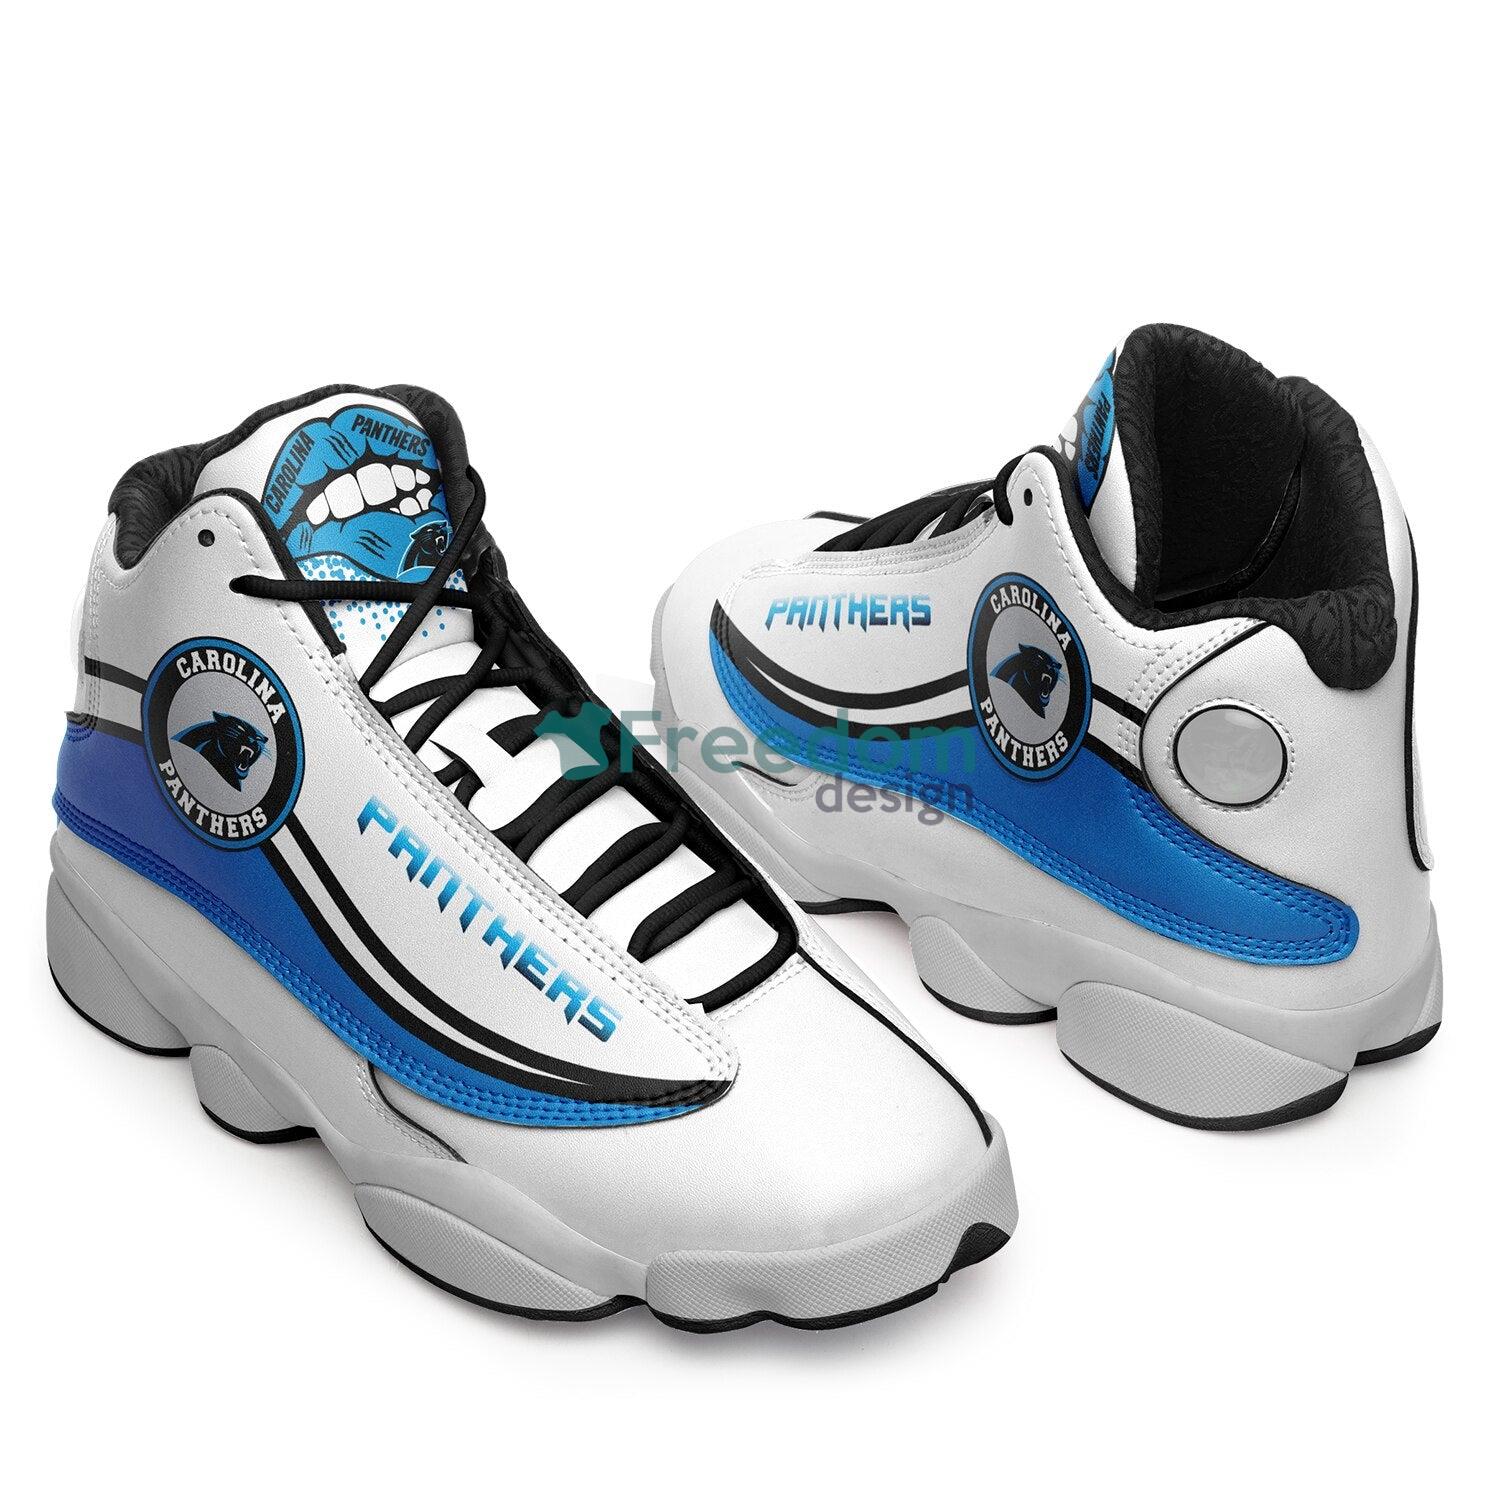 Carolina Panthers Black Air Jordan 13 Sneaker Shoes For Fans